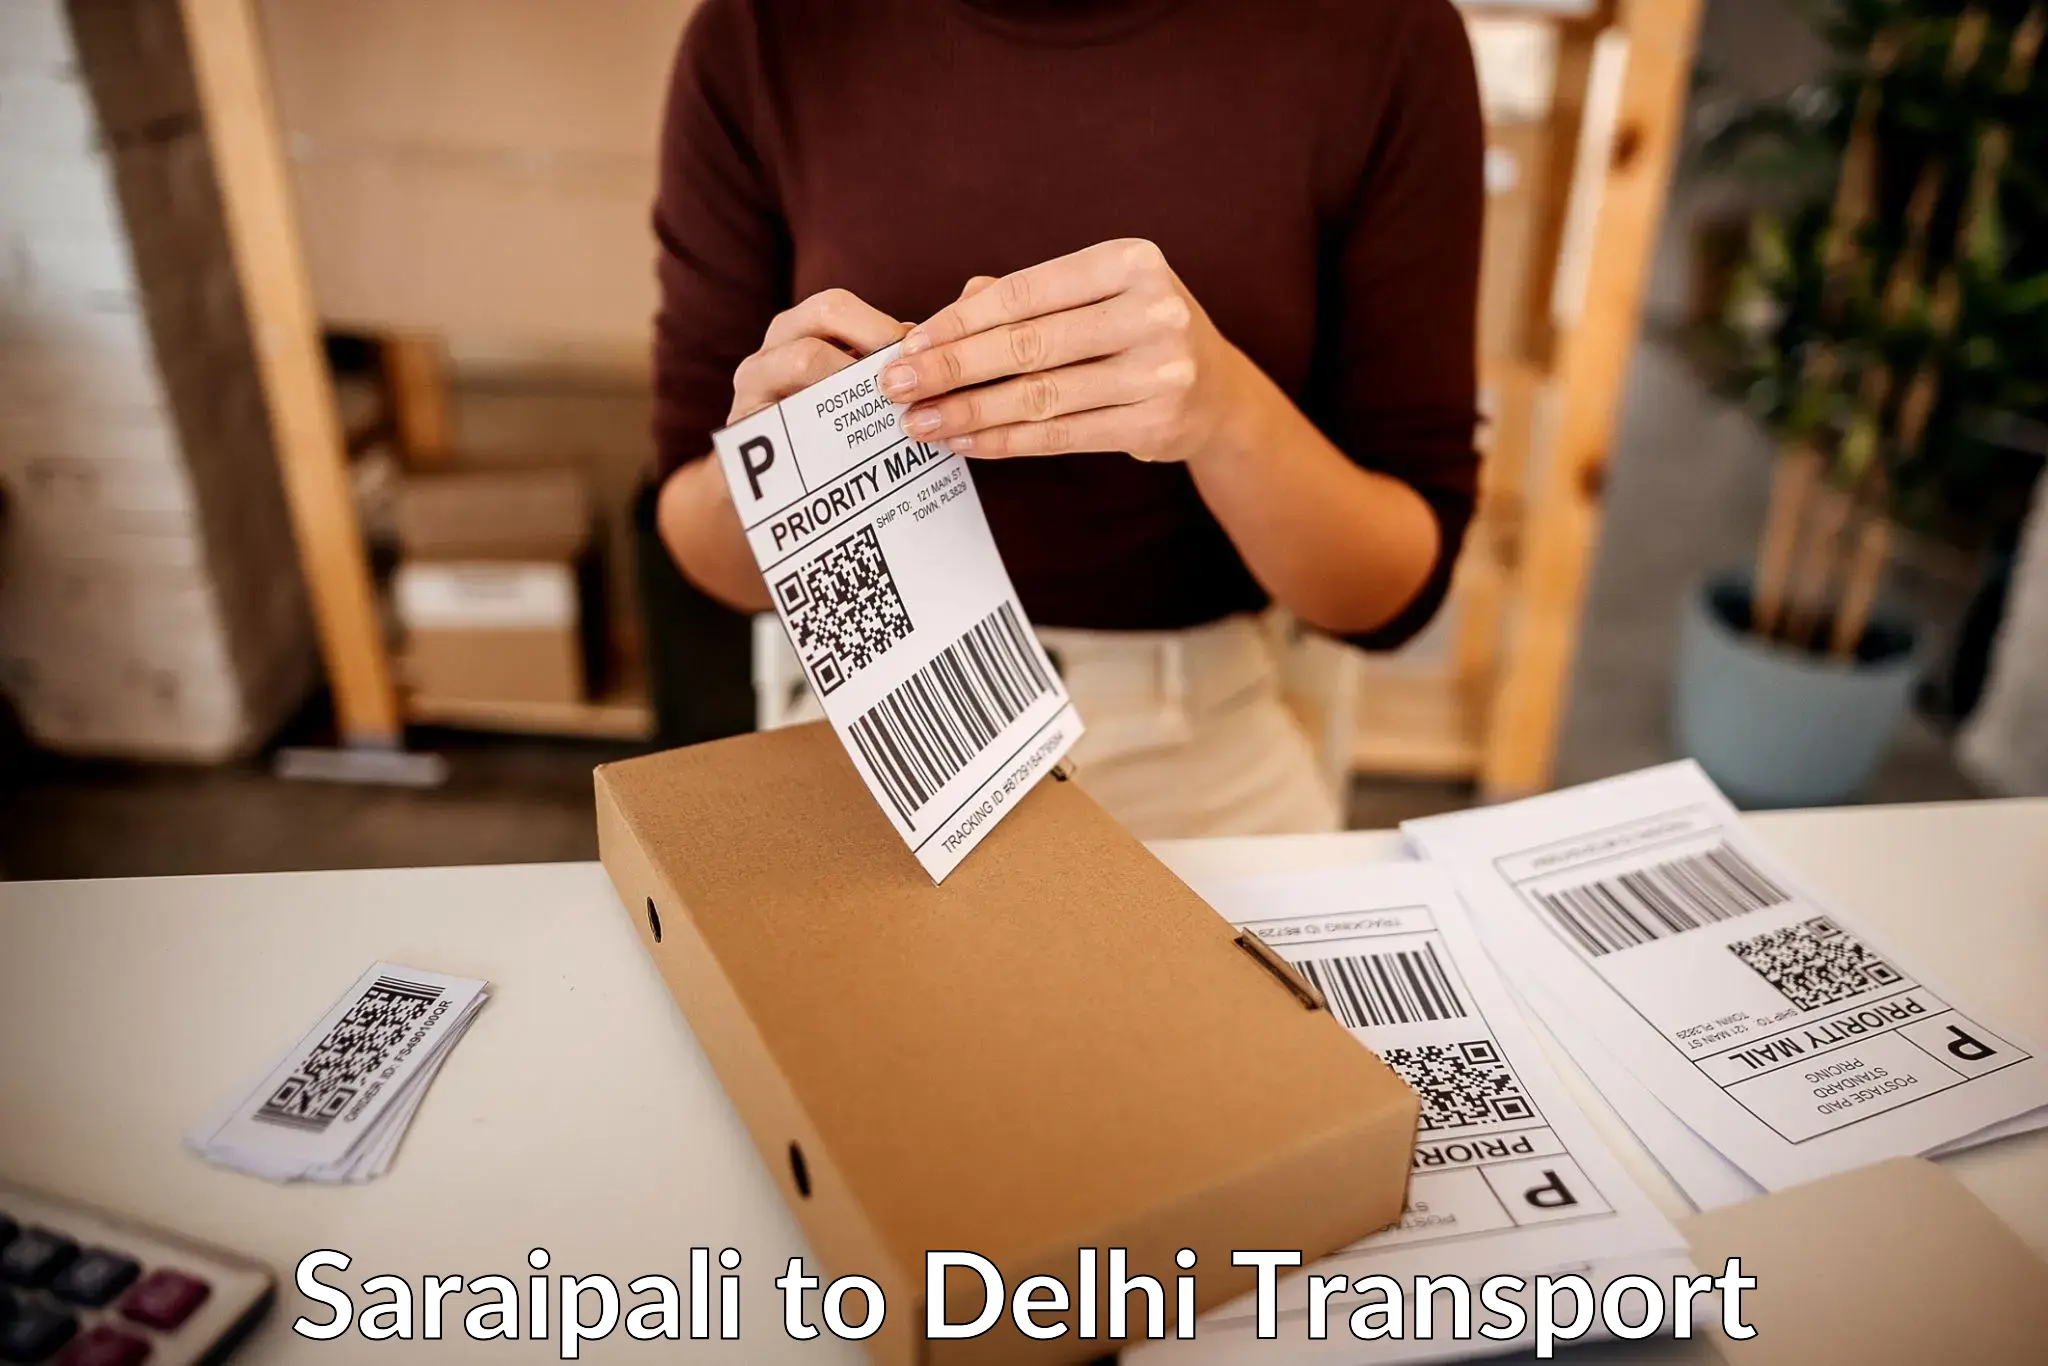 Online transport service Saraipali to East Delhi